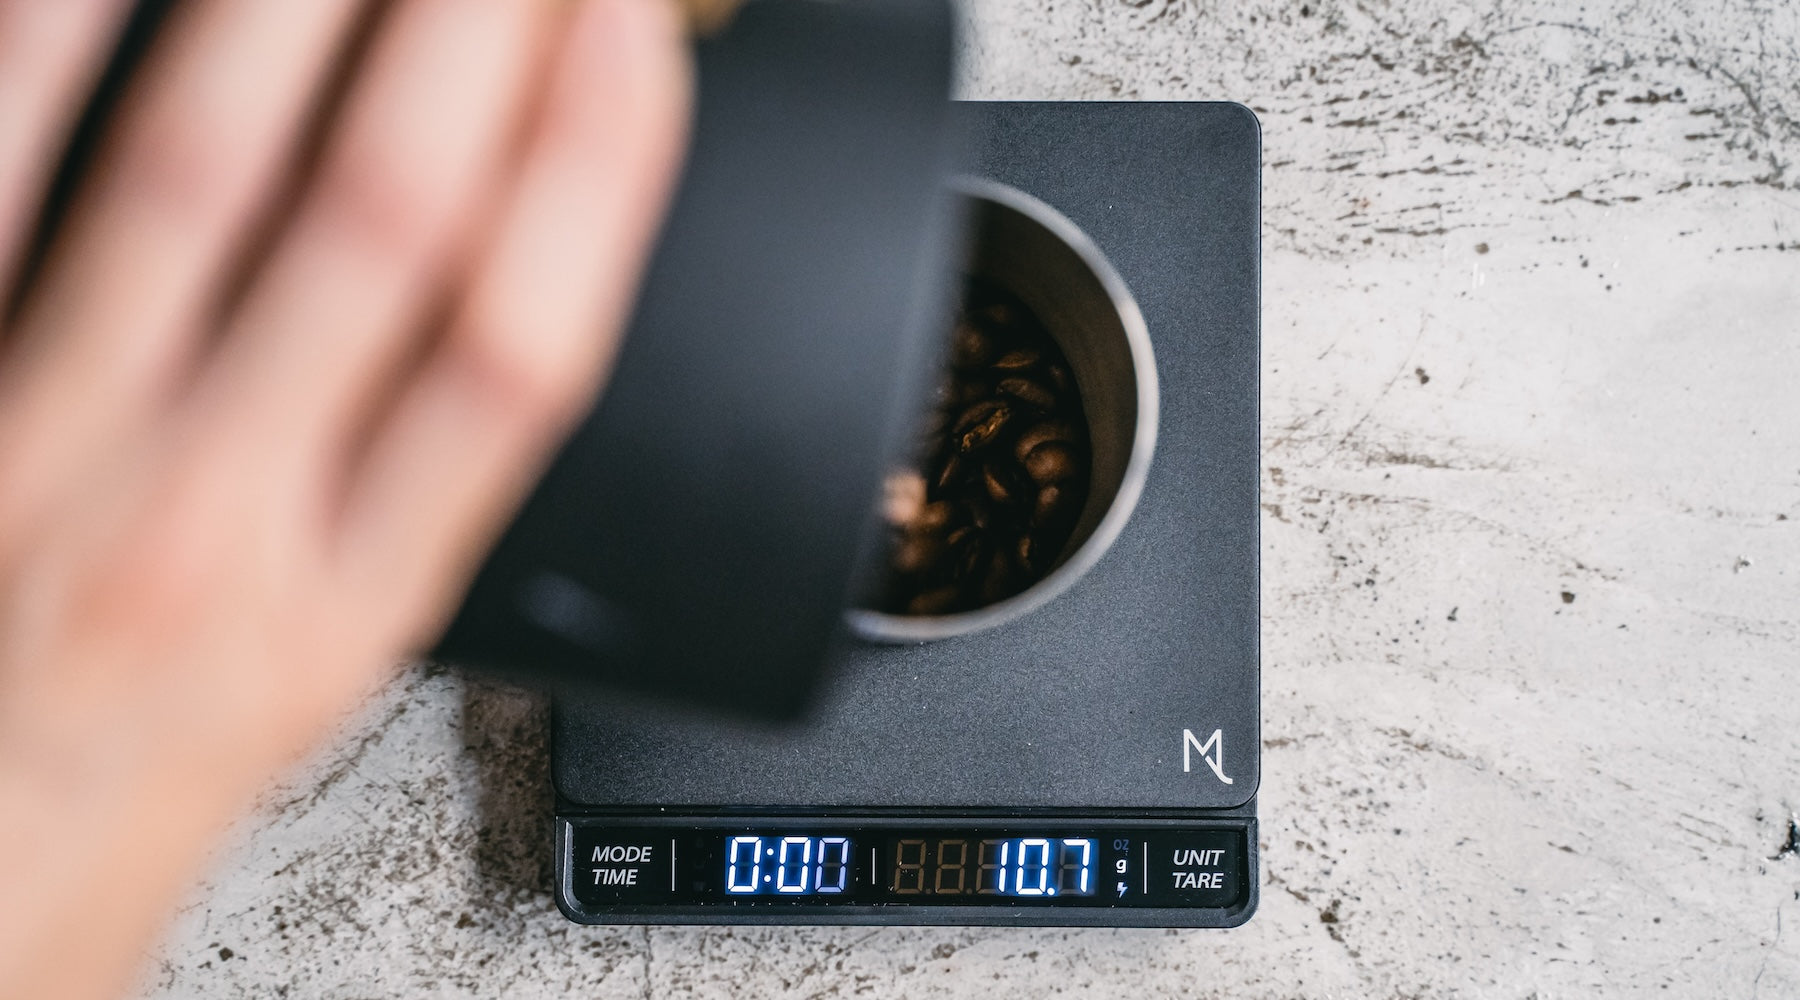 Mx. COOL Katze Smart Coffee Scale Black Weight Mode